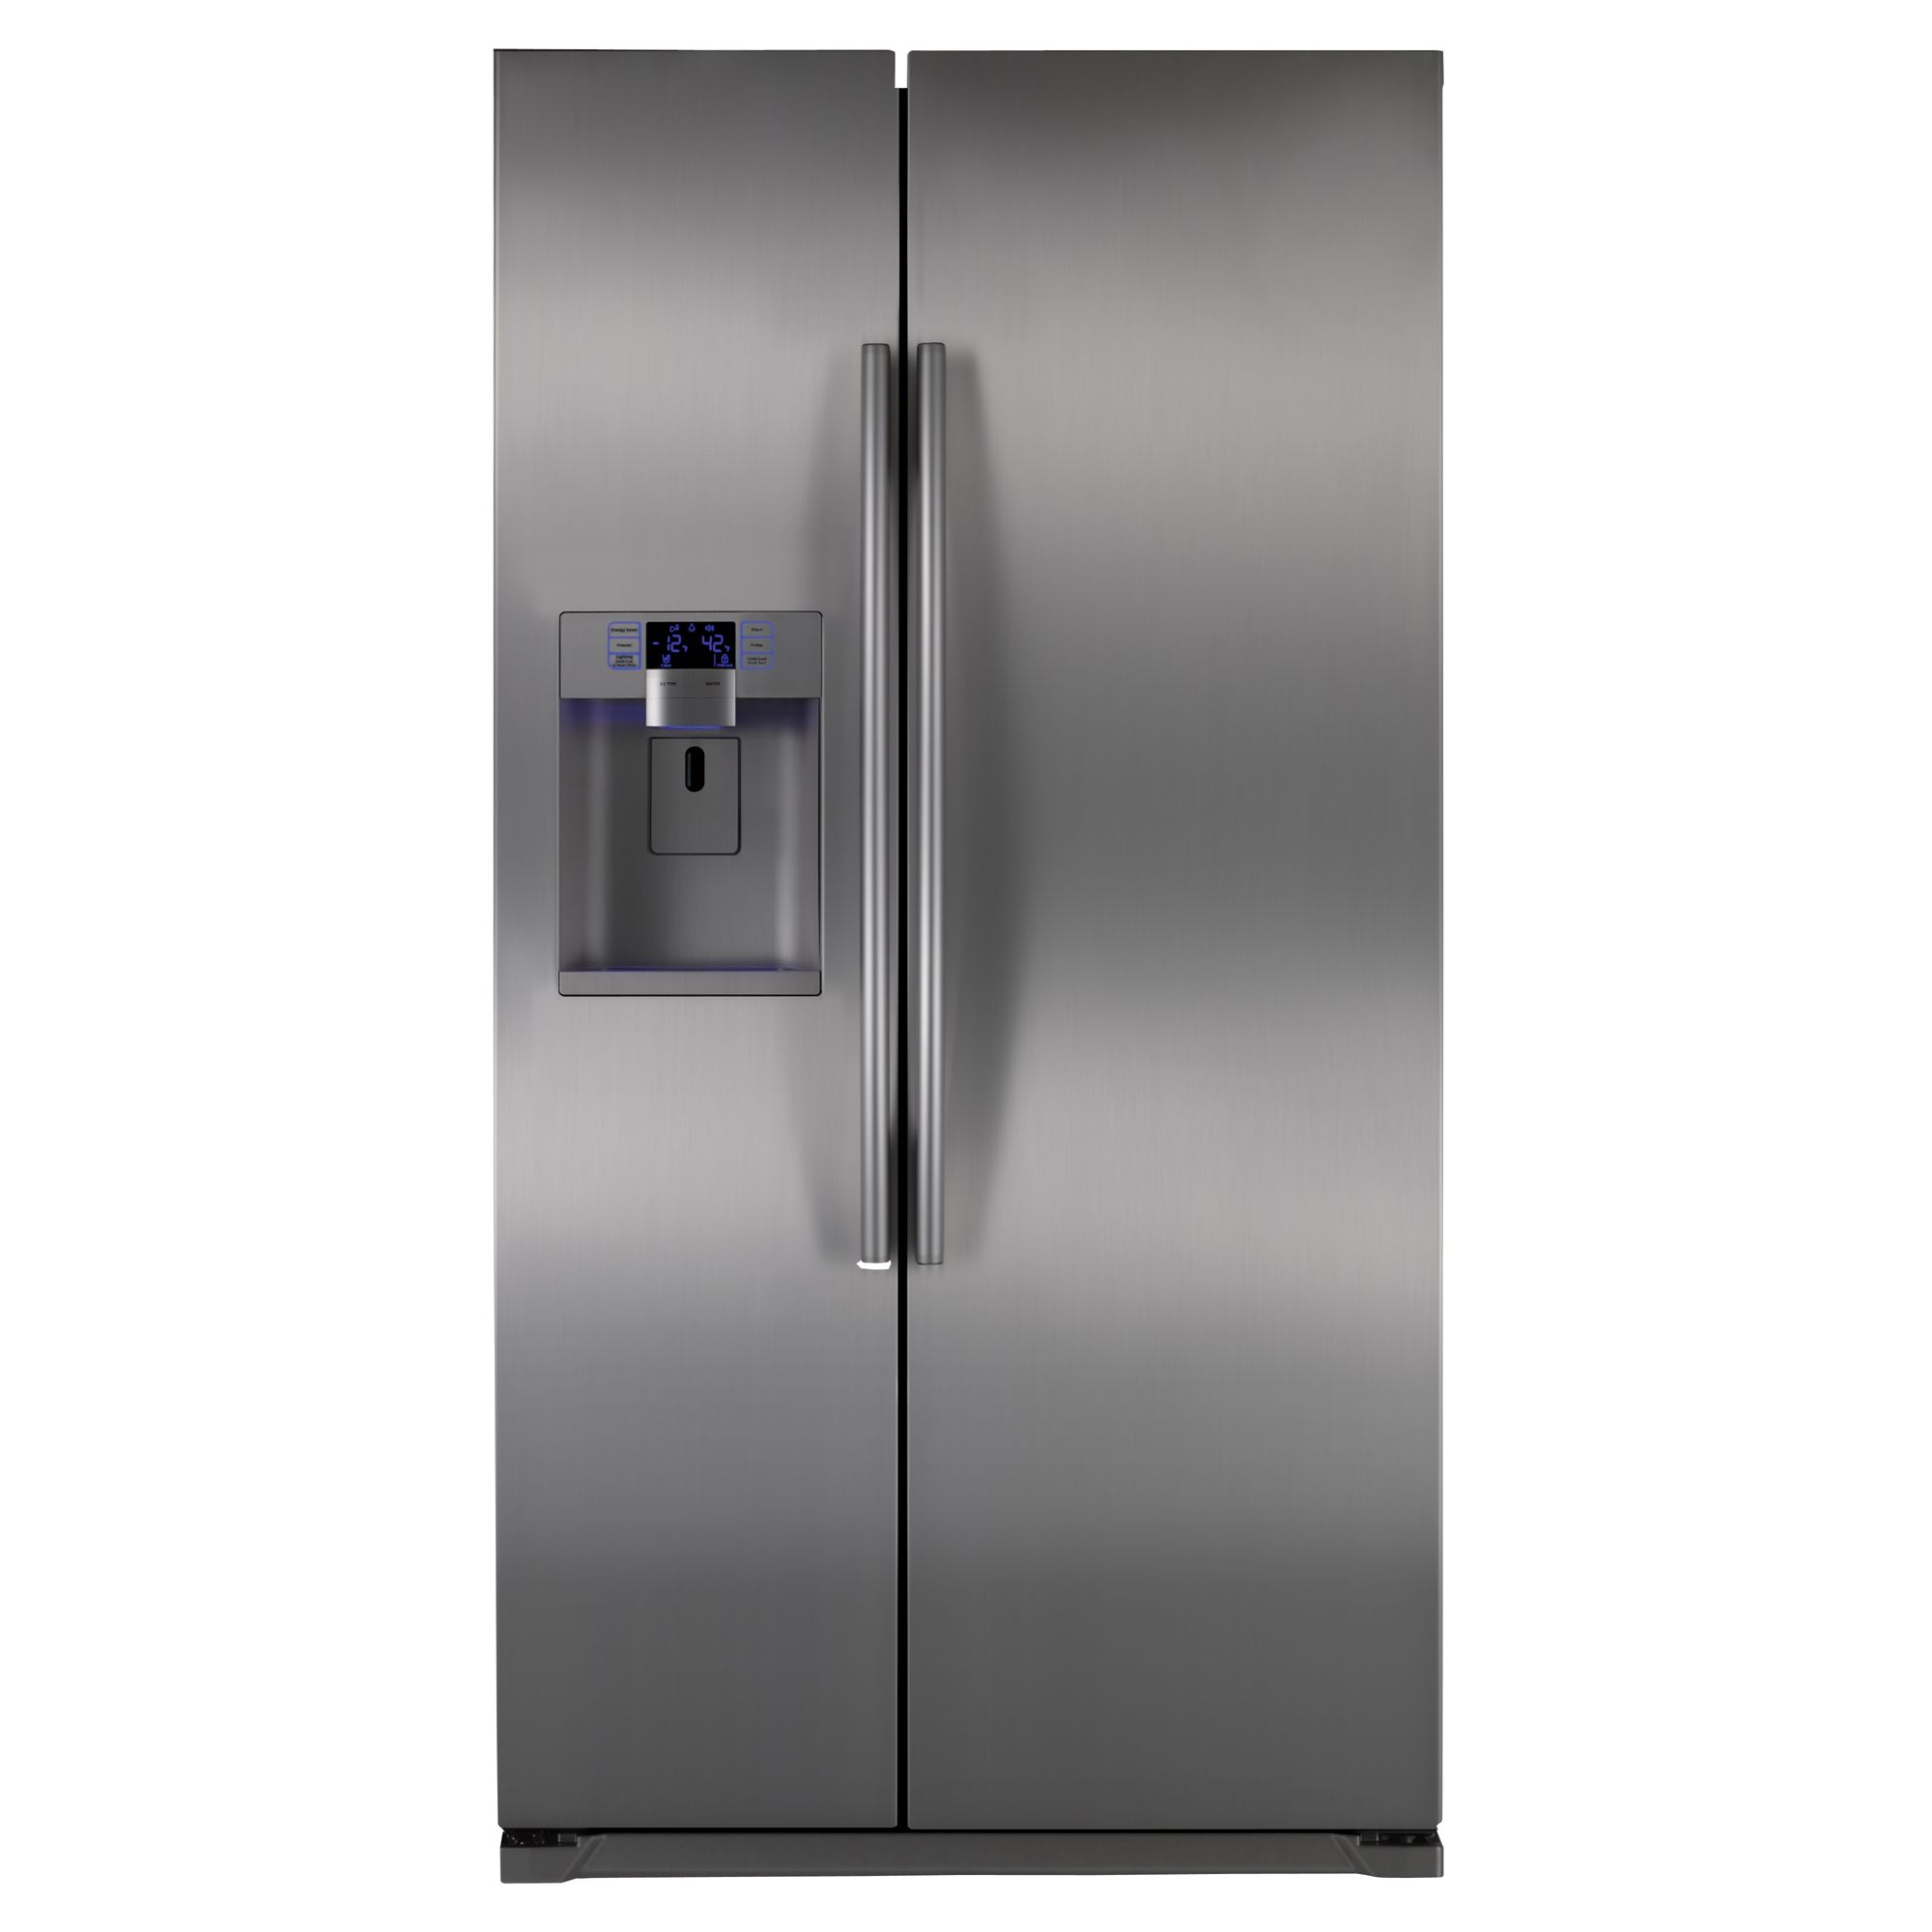 Samsung 24.1 cu. ft. Side-By-Side Refrigerator